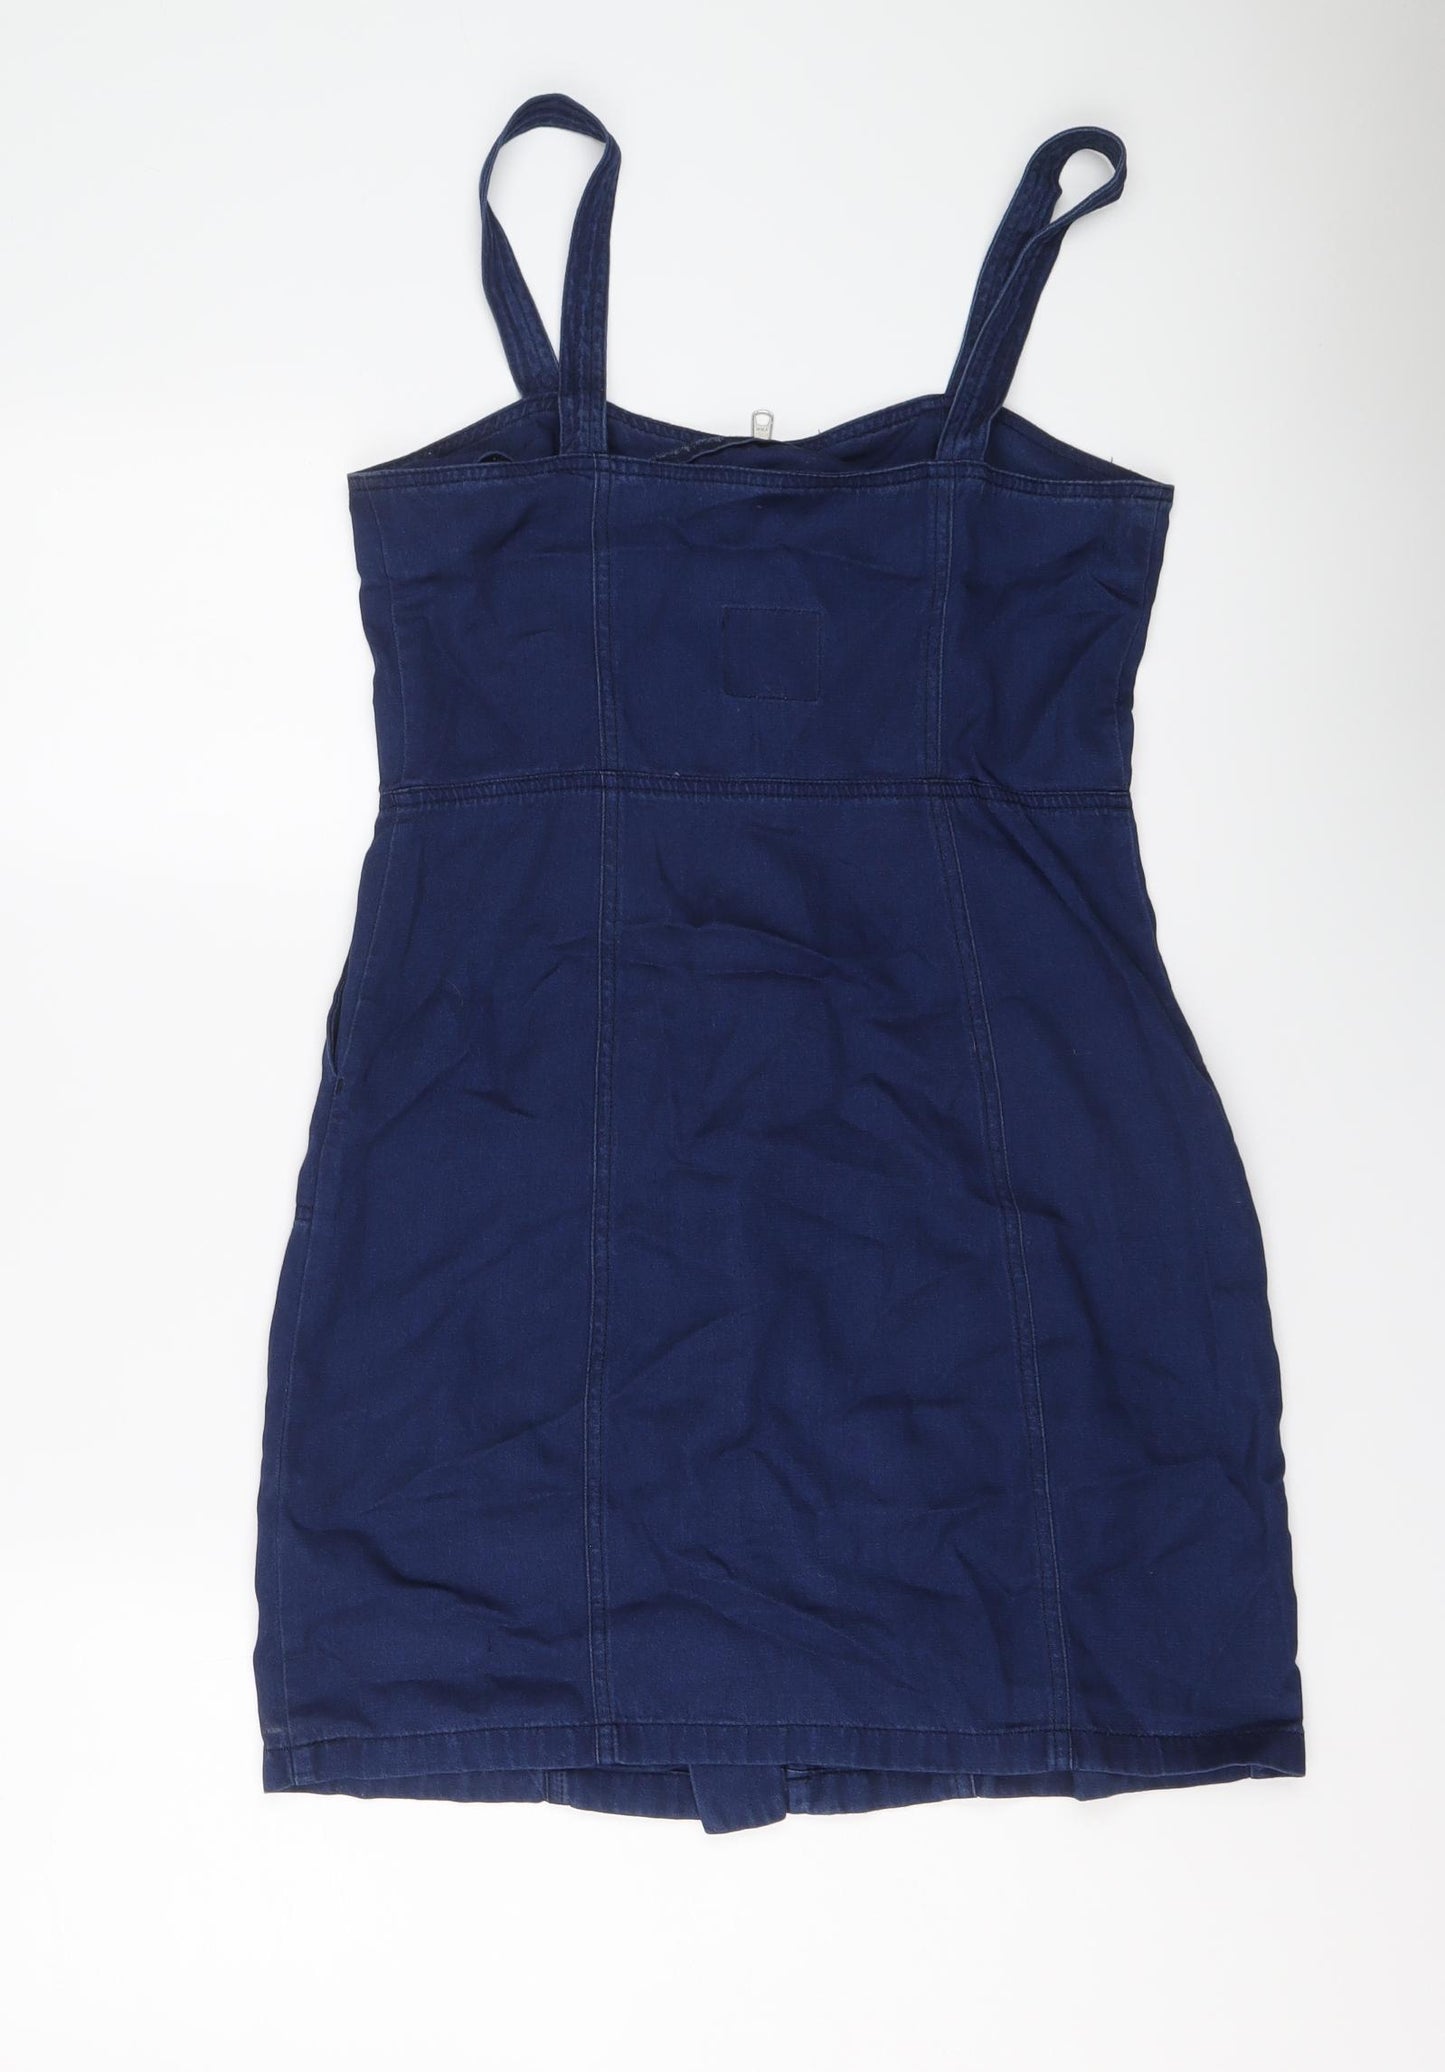 NEXT Womens Blue Lyocell Pinafore/Dungaree Dress Size 10 V-Neck Zip